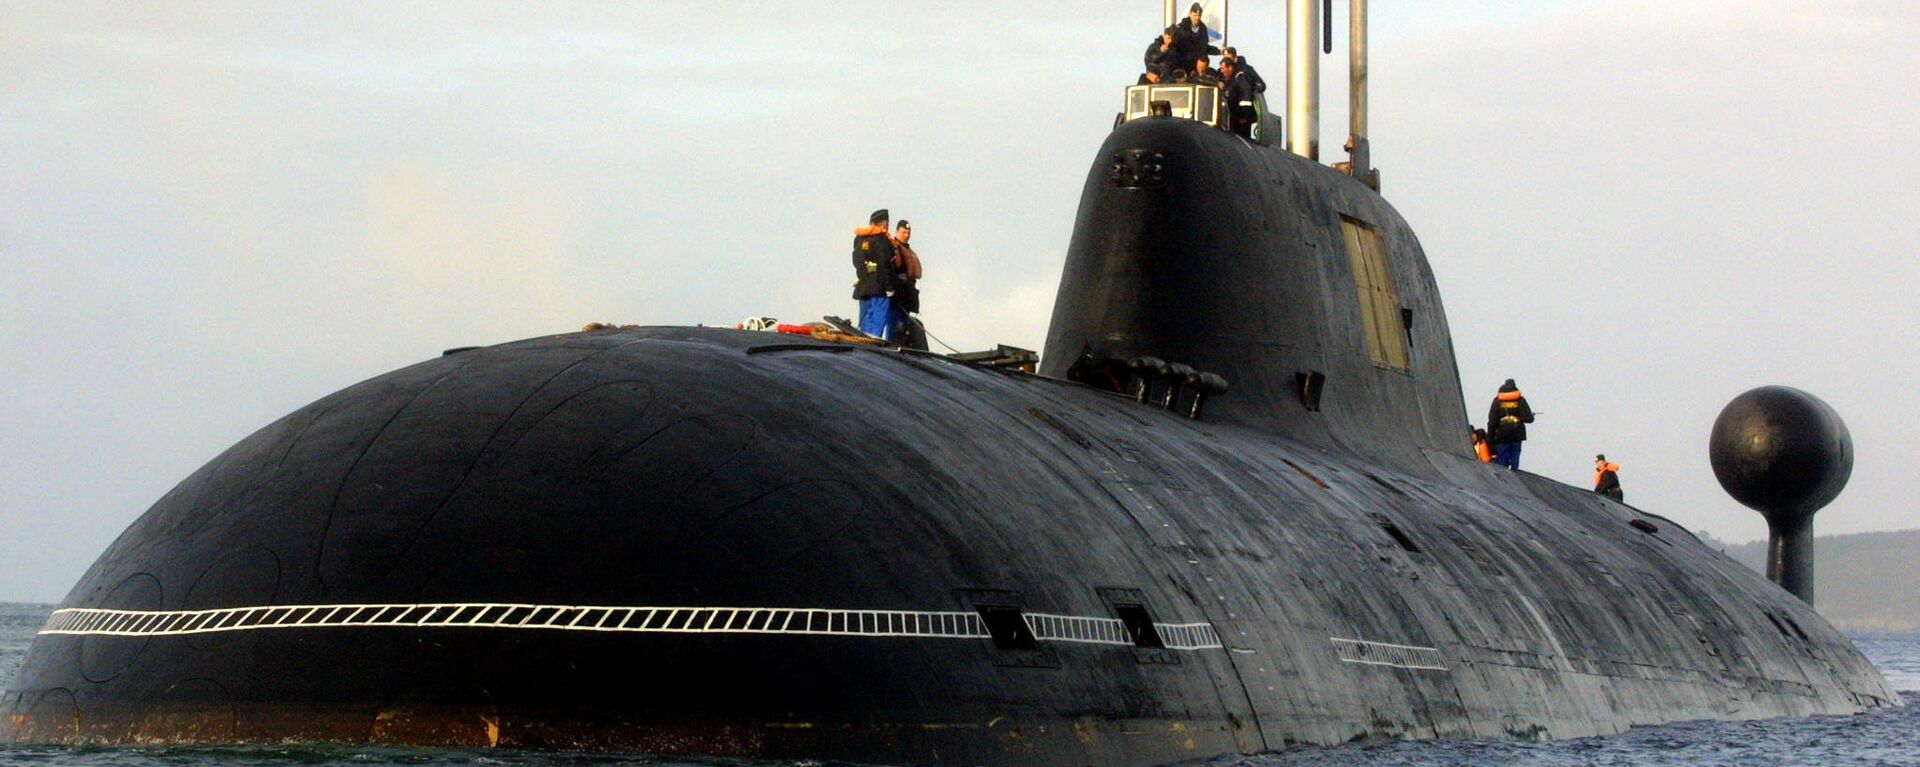 Ruska nuklearna podmornica Vepr Projekta 971 klase Štuka-B (Ajkula) u luci Brest na zapadu Francuske. - Sputnik Srbija, 1920, 04.08.2021